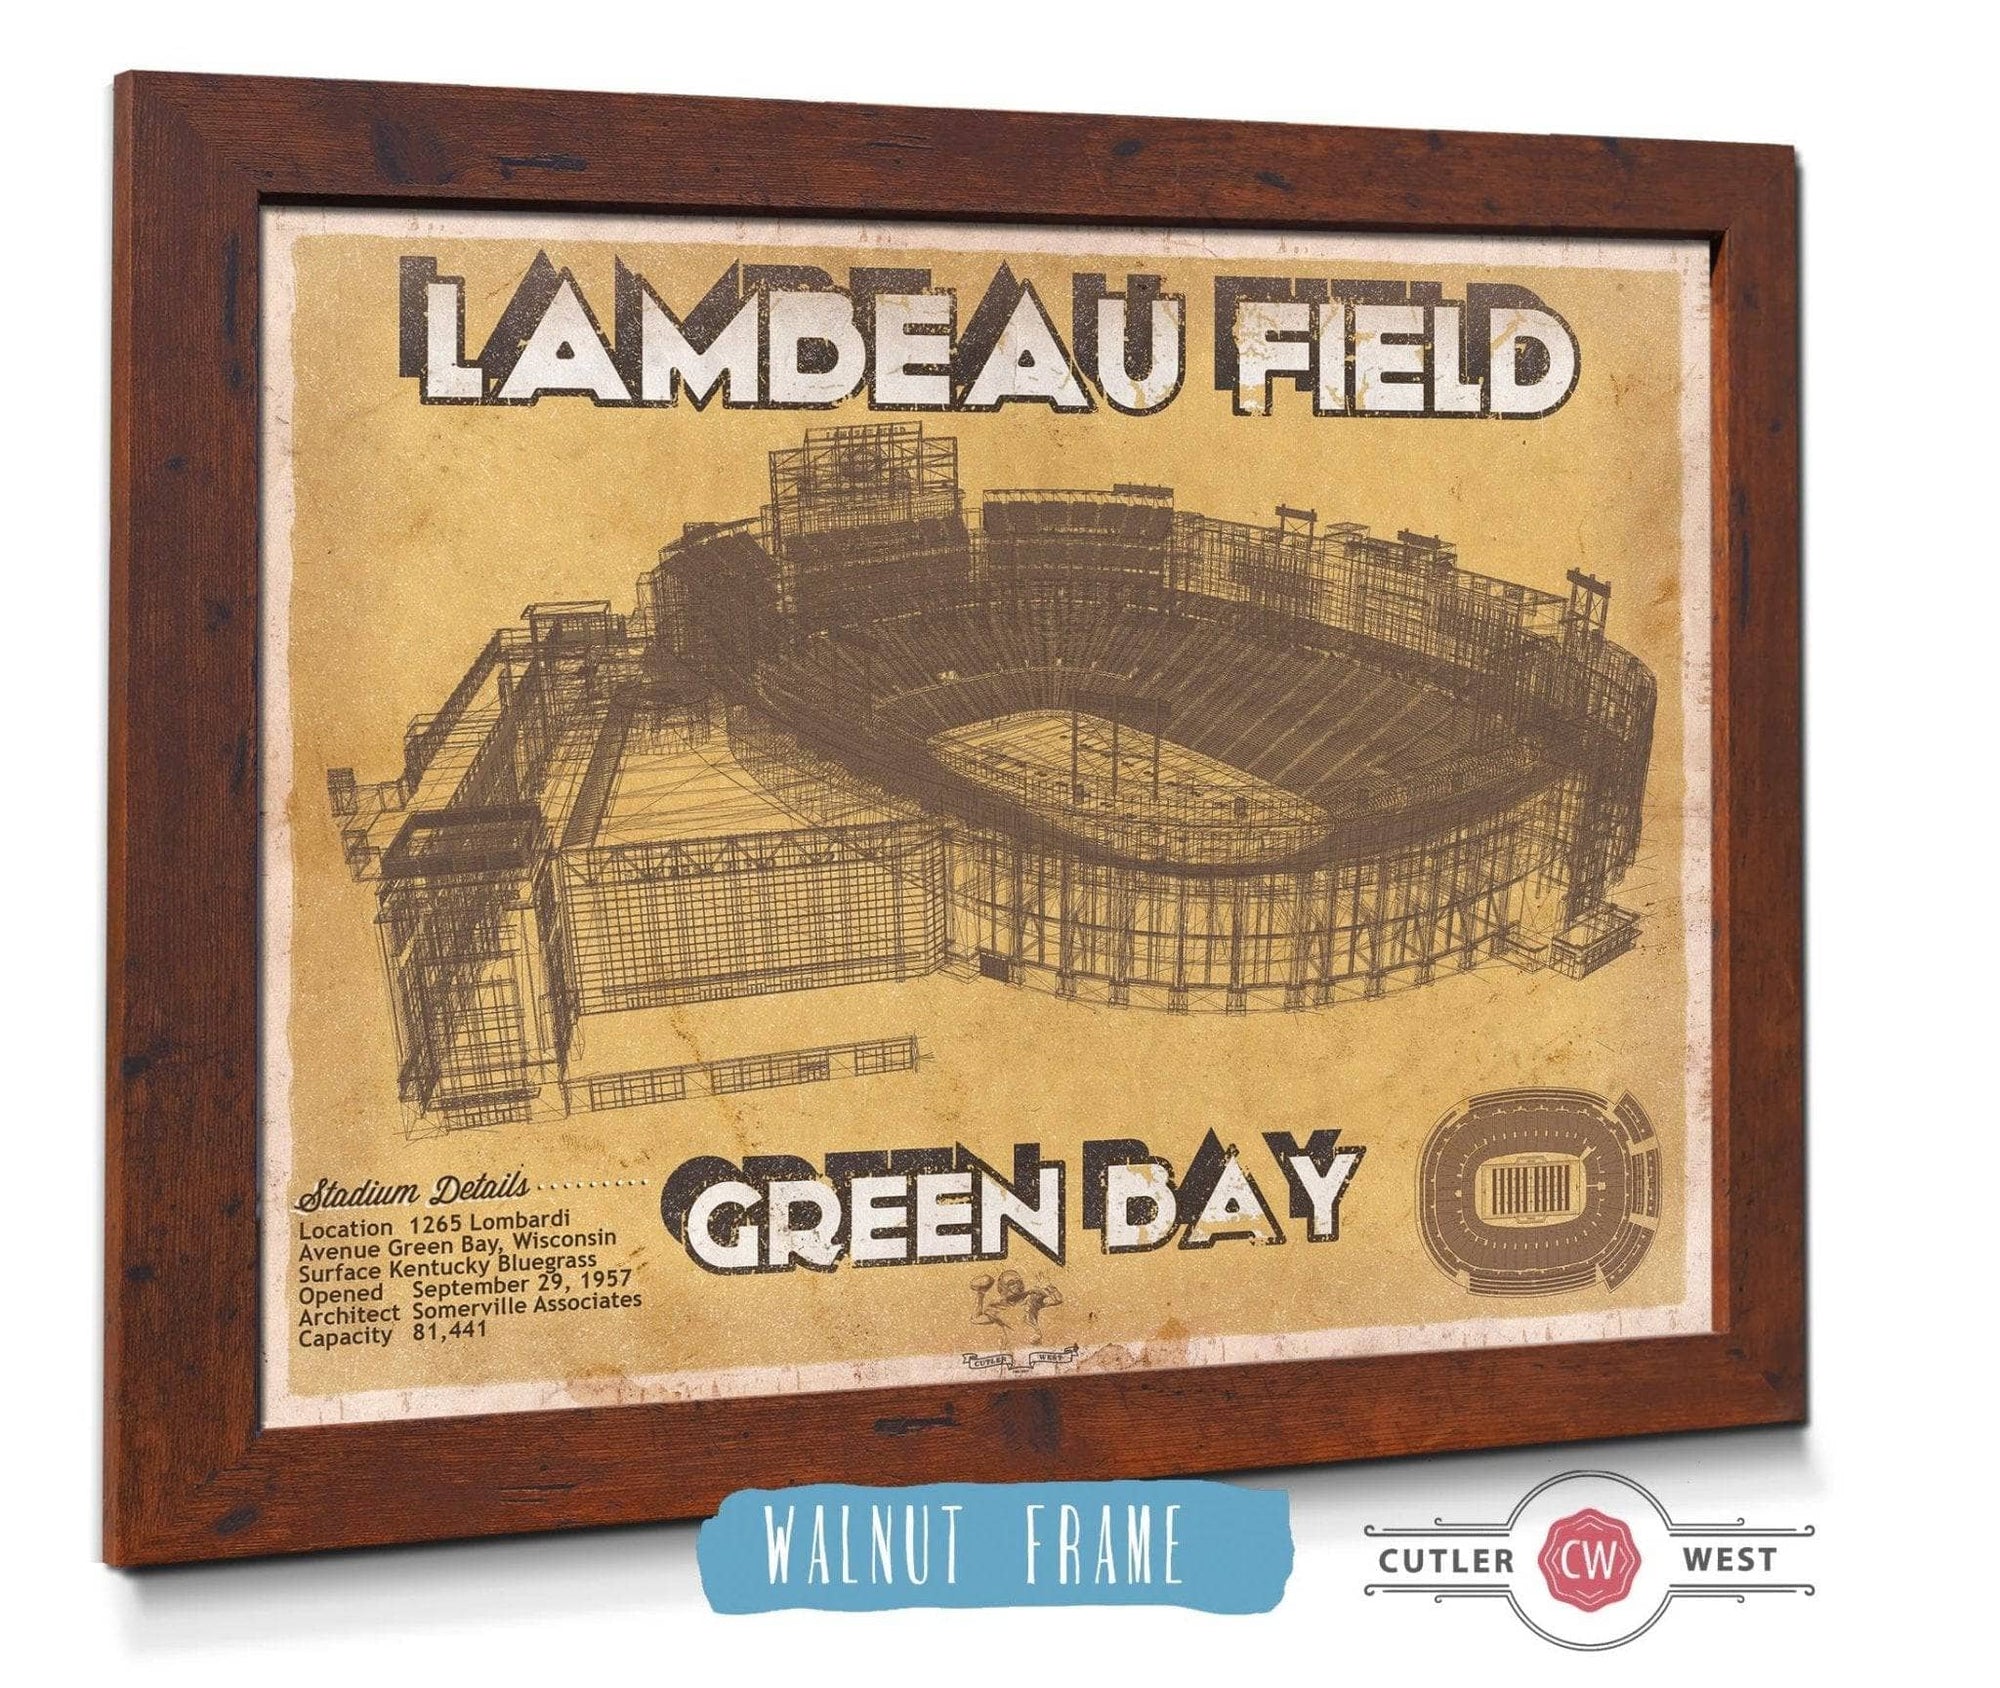 Cutler West Pro Football Collection 14" x 11" / Walnut Frame Green Bay Packers - Lambeau Field Vintage Football Print 698877220-TEAM_65965